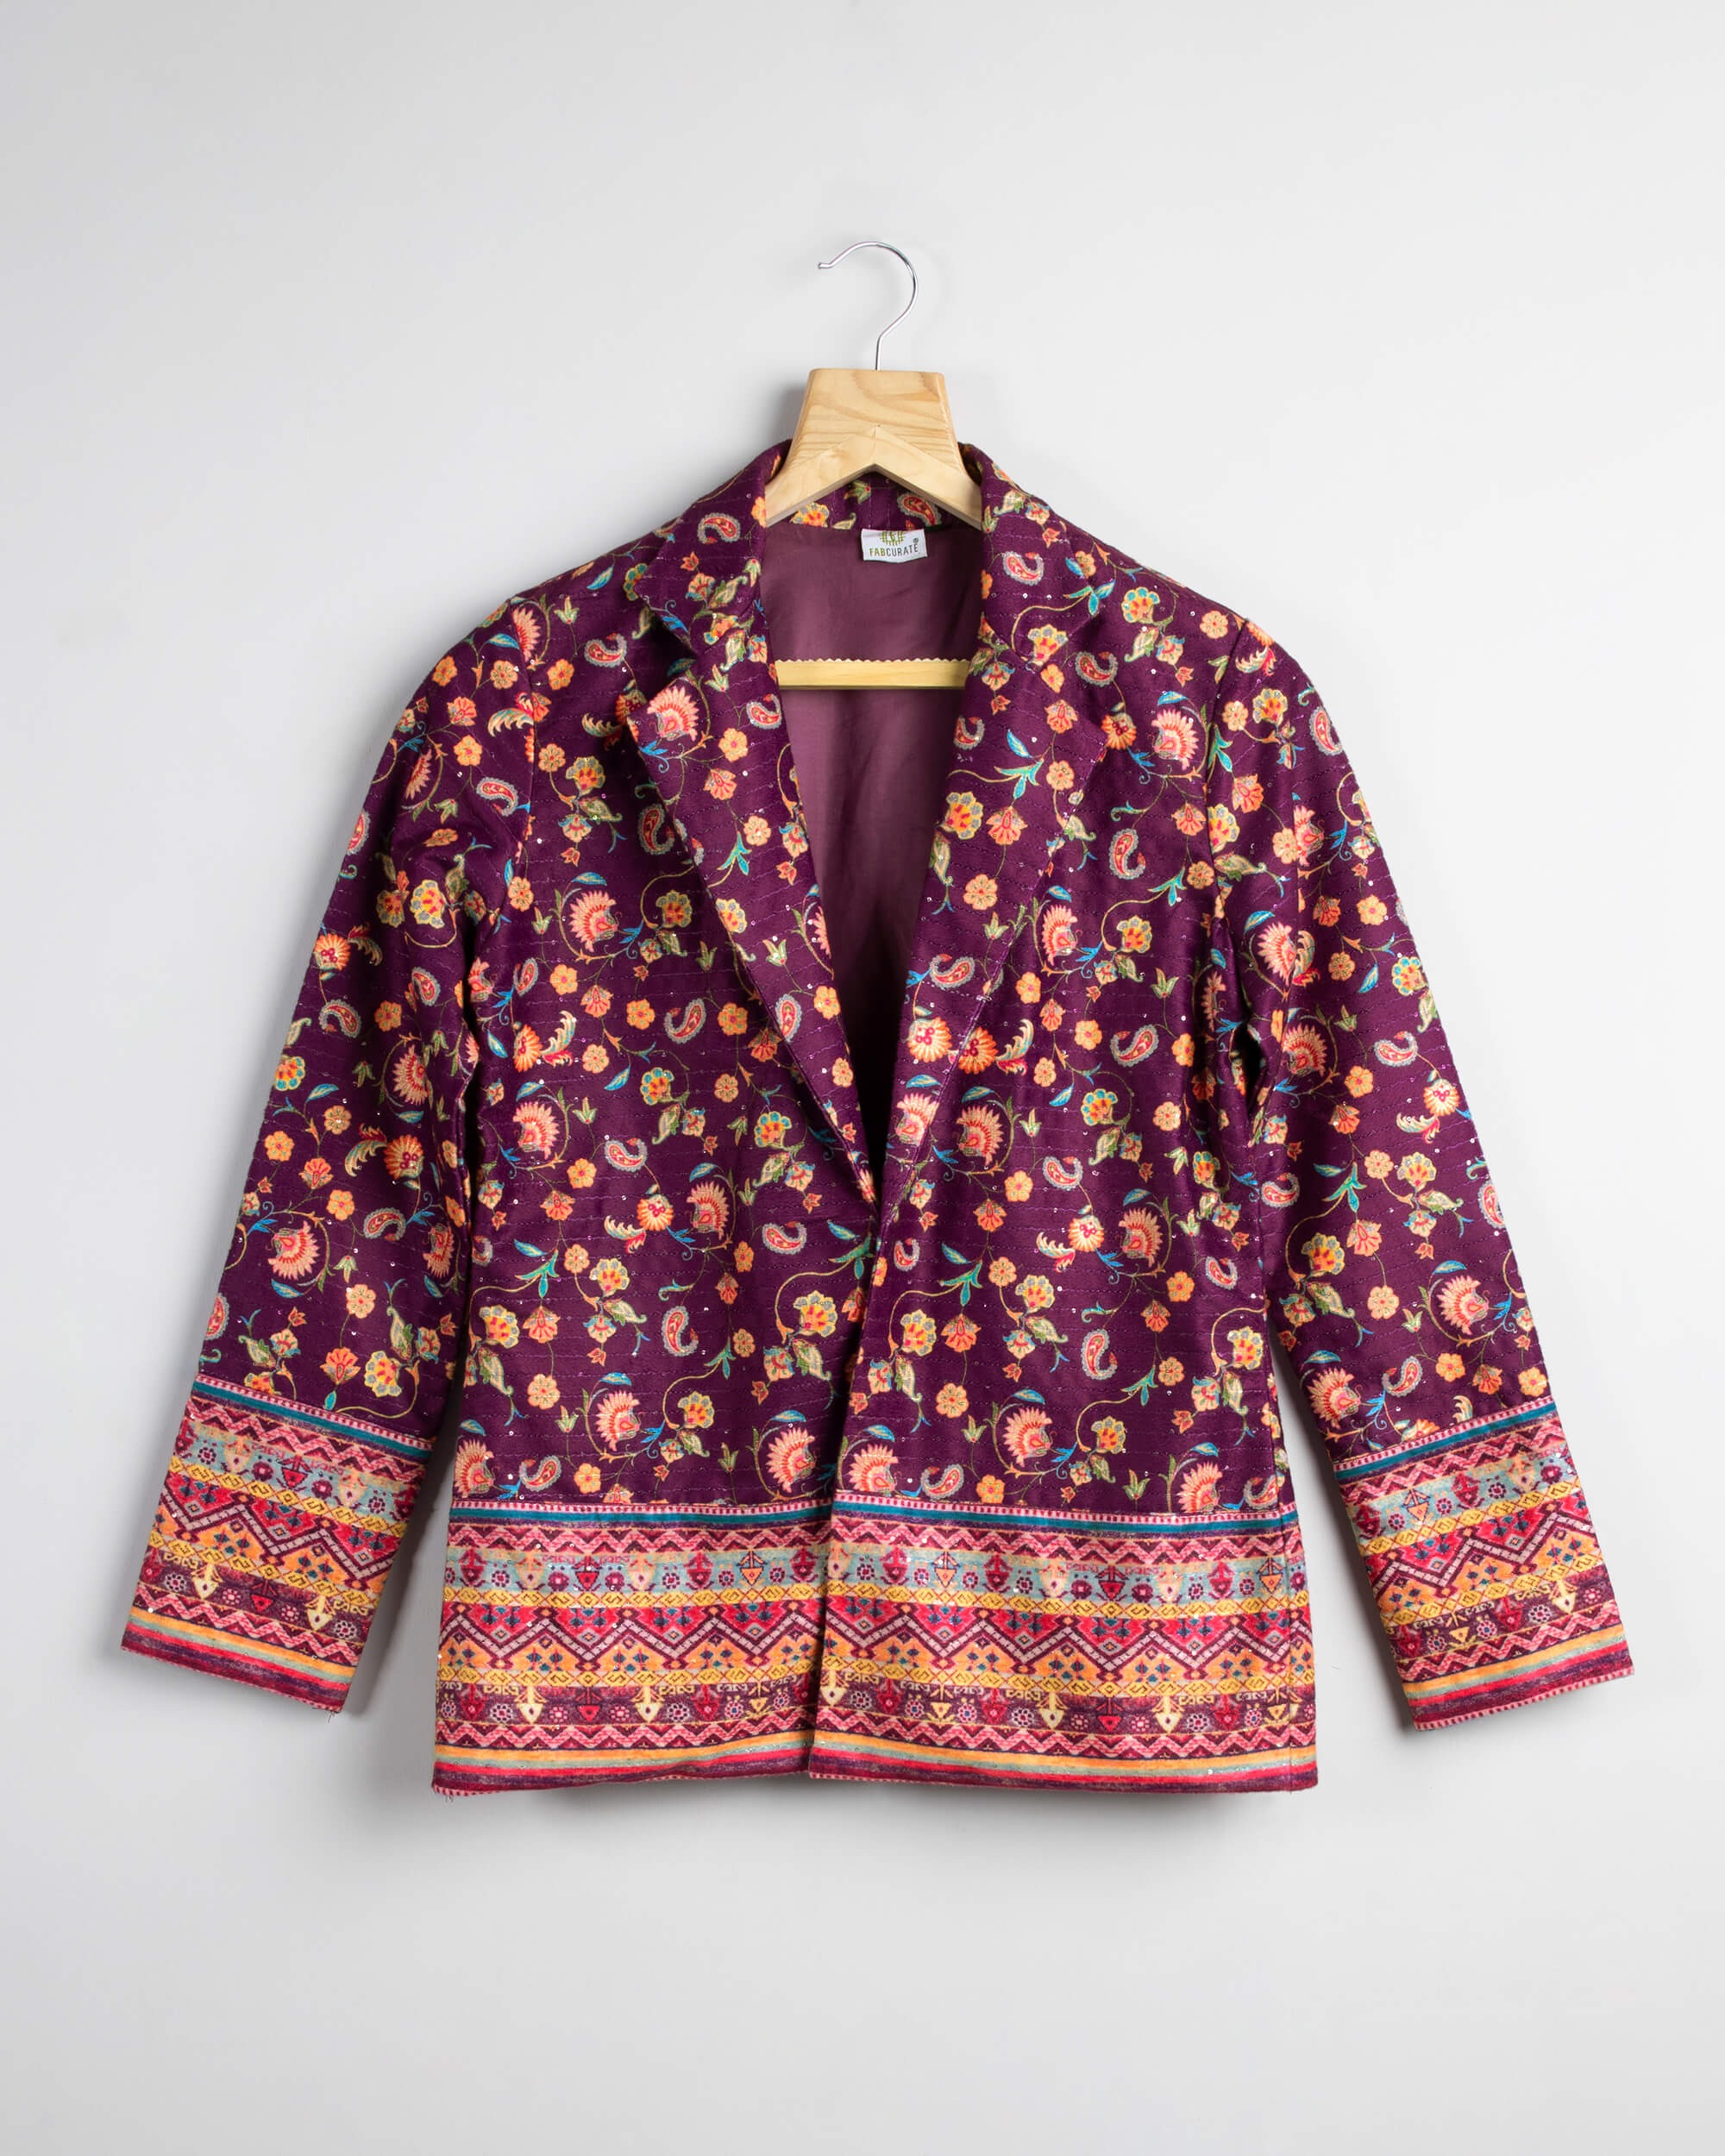 Shop Monsoon Women's Velvet Jackets up to 70% Off | DealDoodle